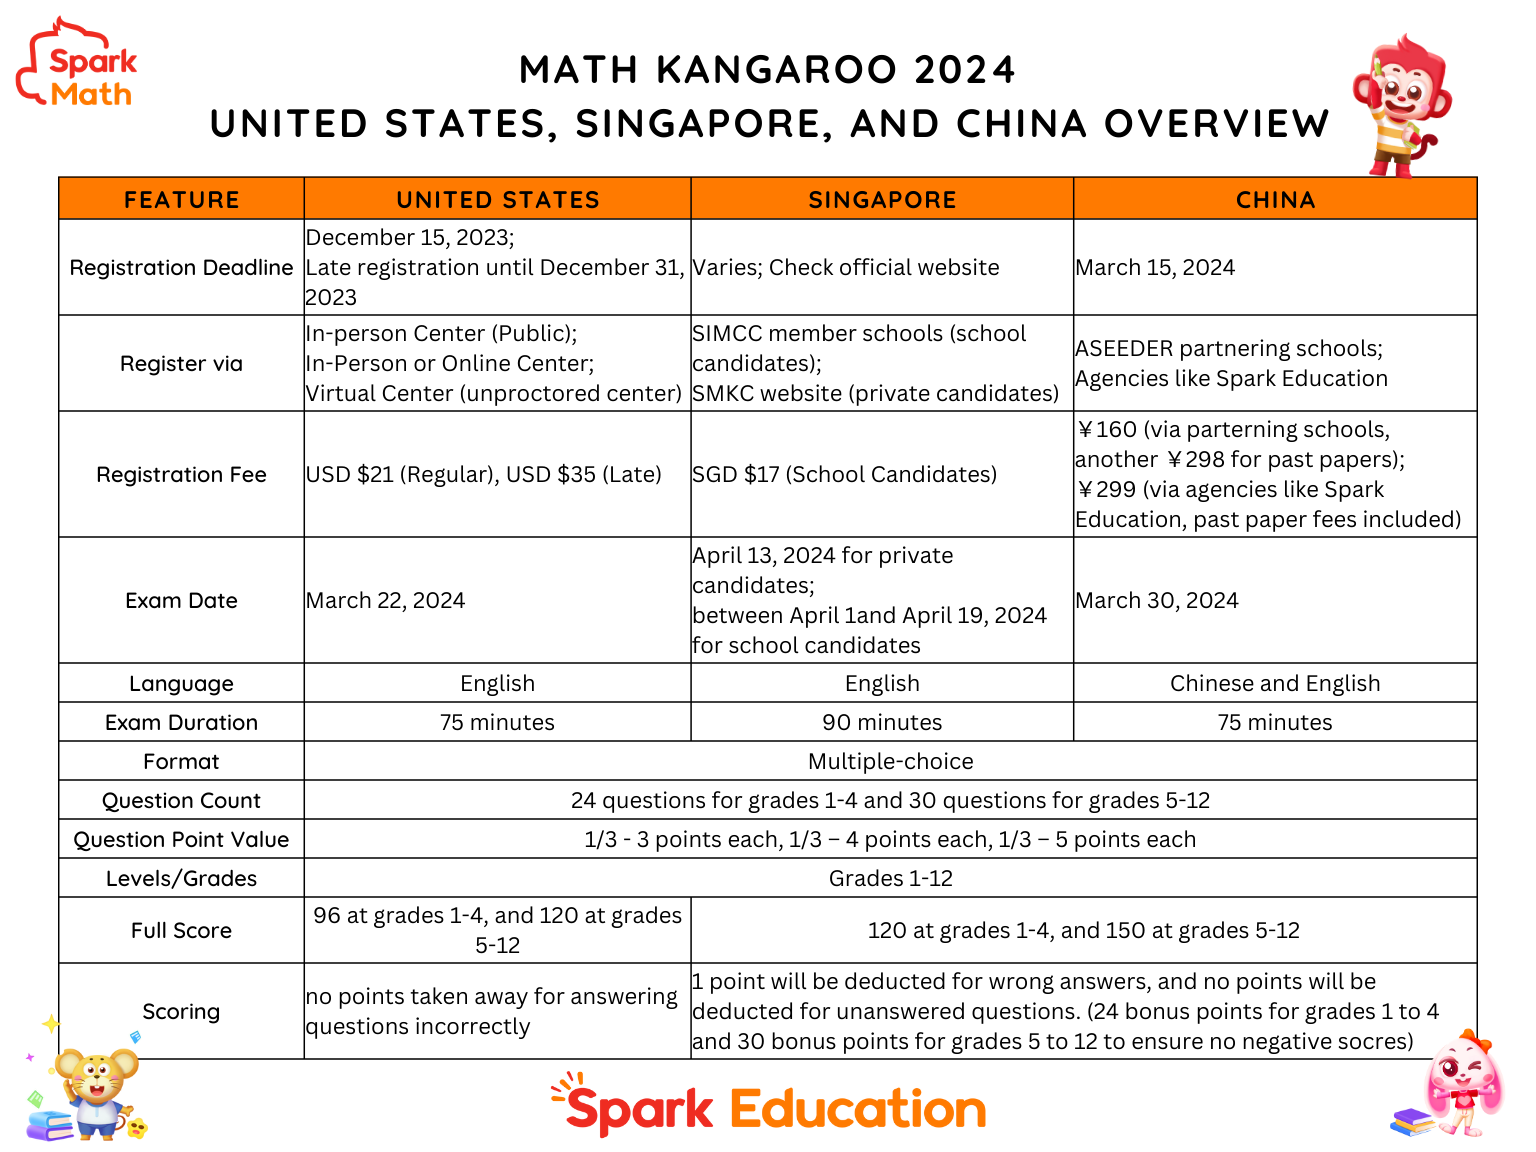 Comparison table for Math Kangaroo information across USA, Singapore and China